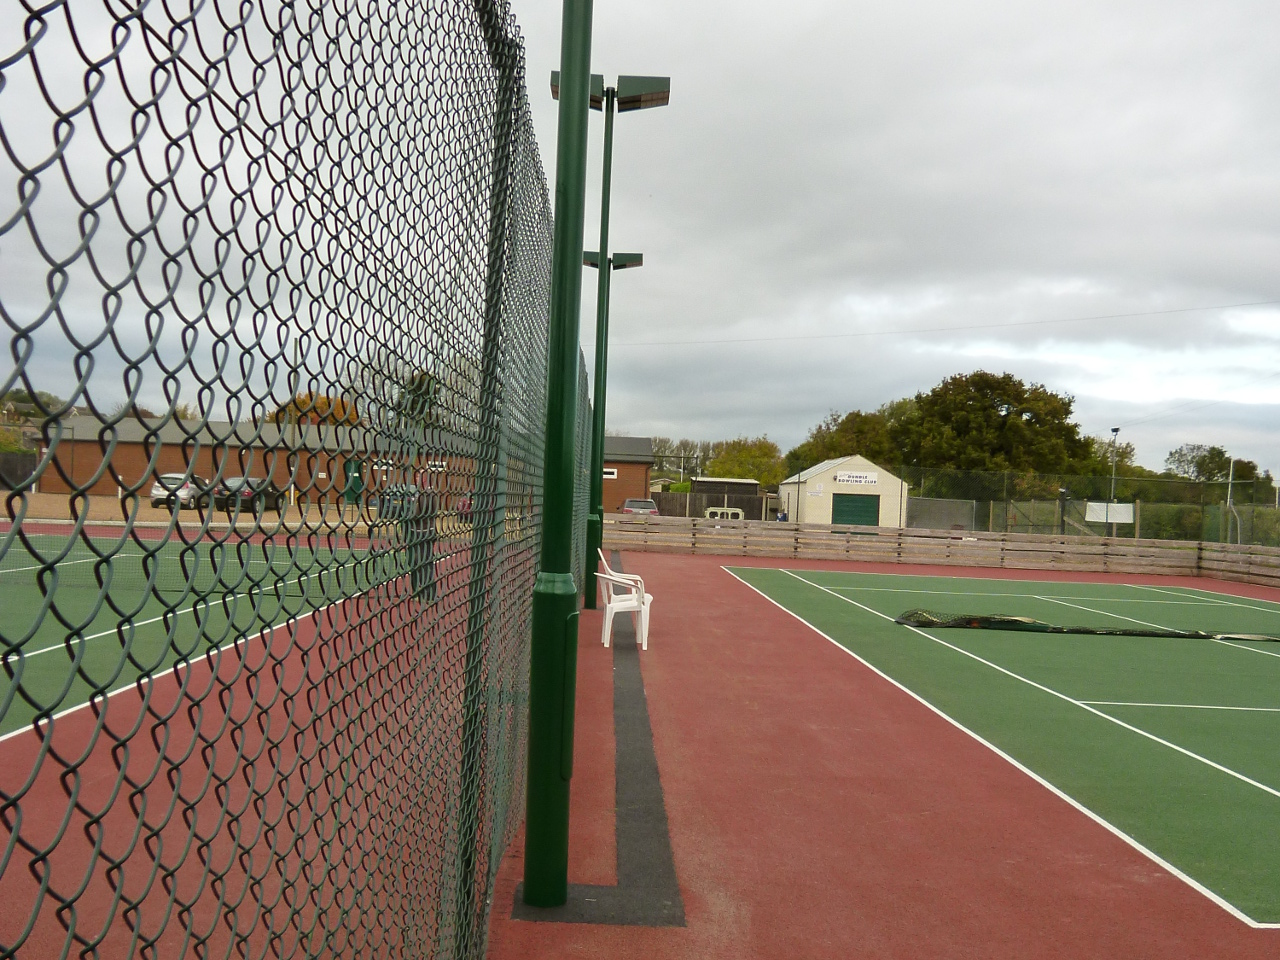 Oundle Tennis Club